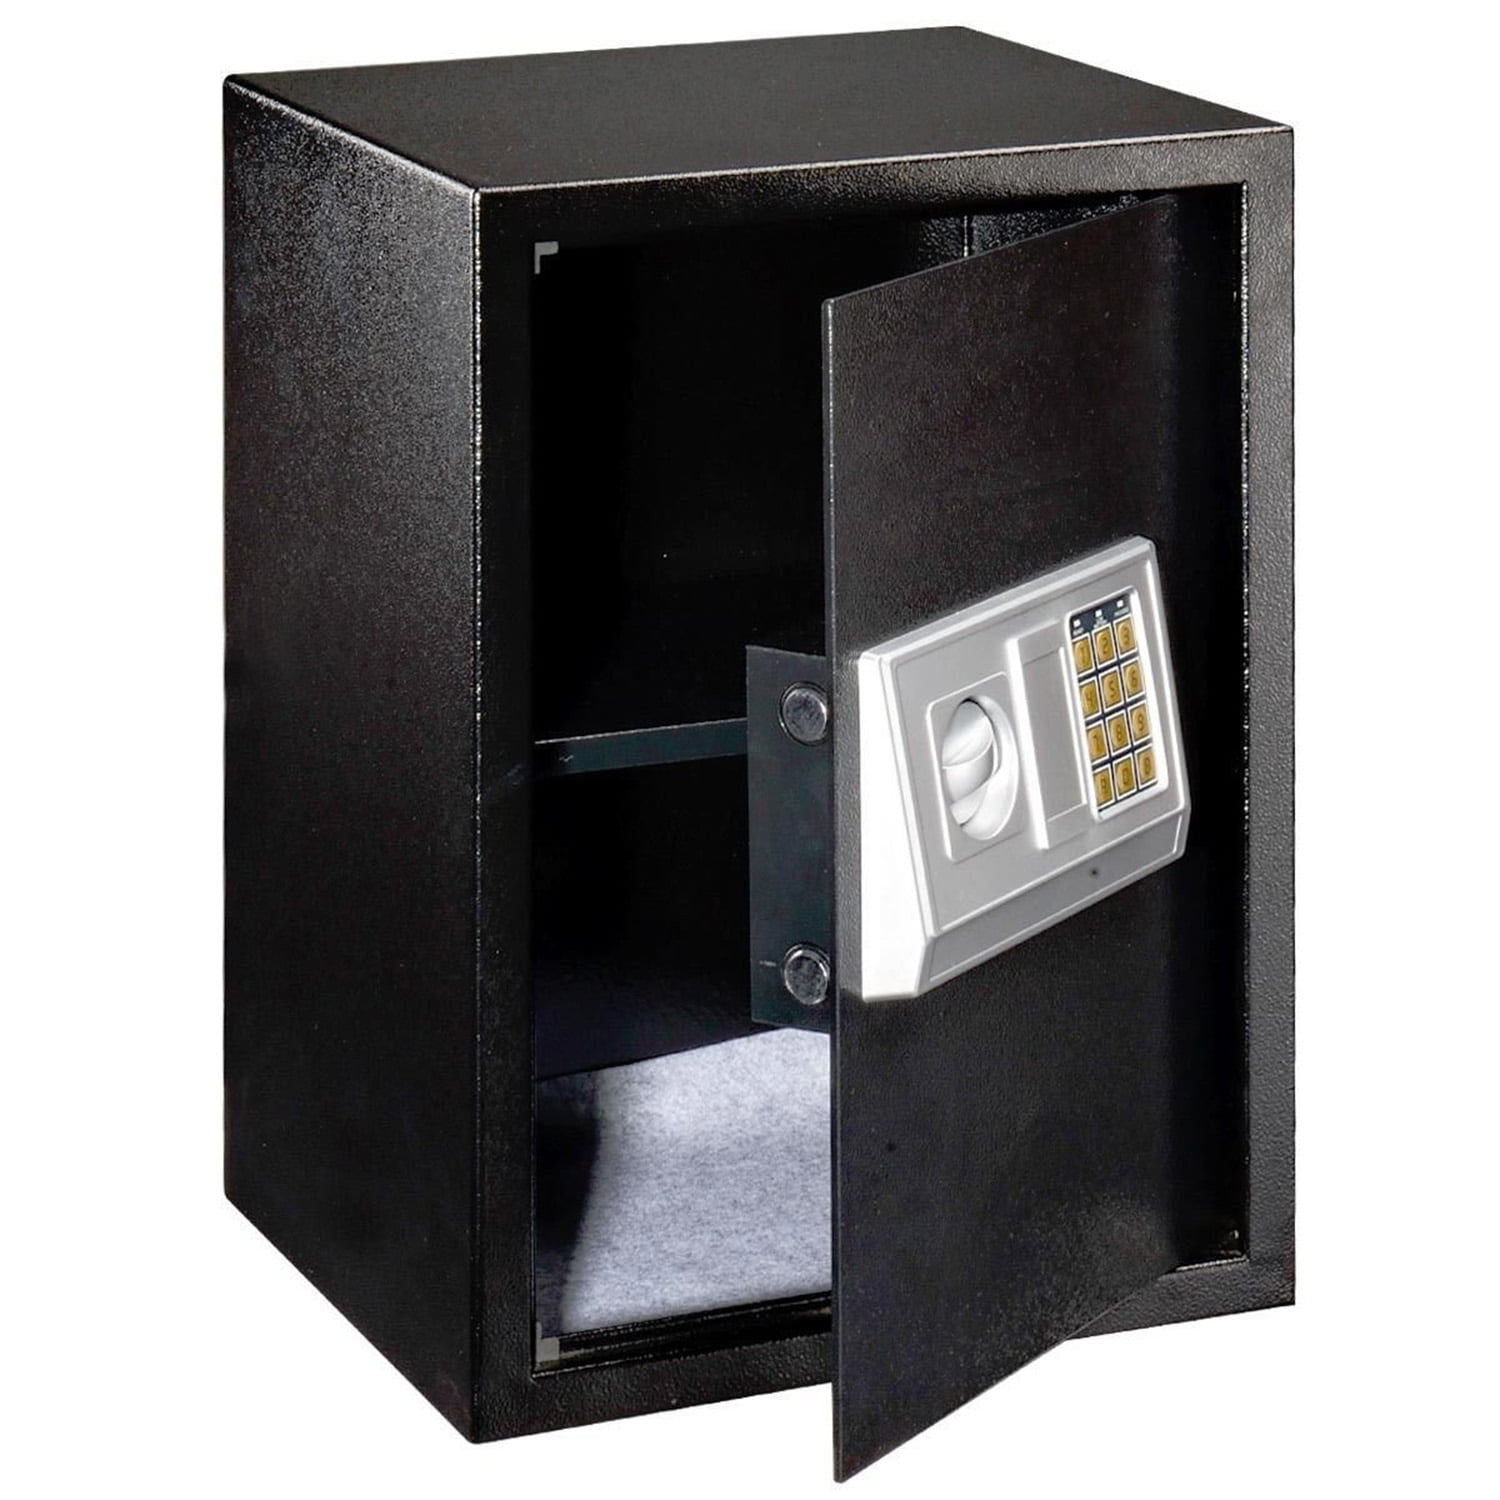 New Home Office Black Large Digital Electronic Safe Box Keypad Lock Security 